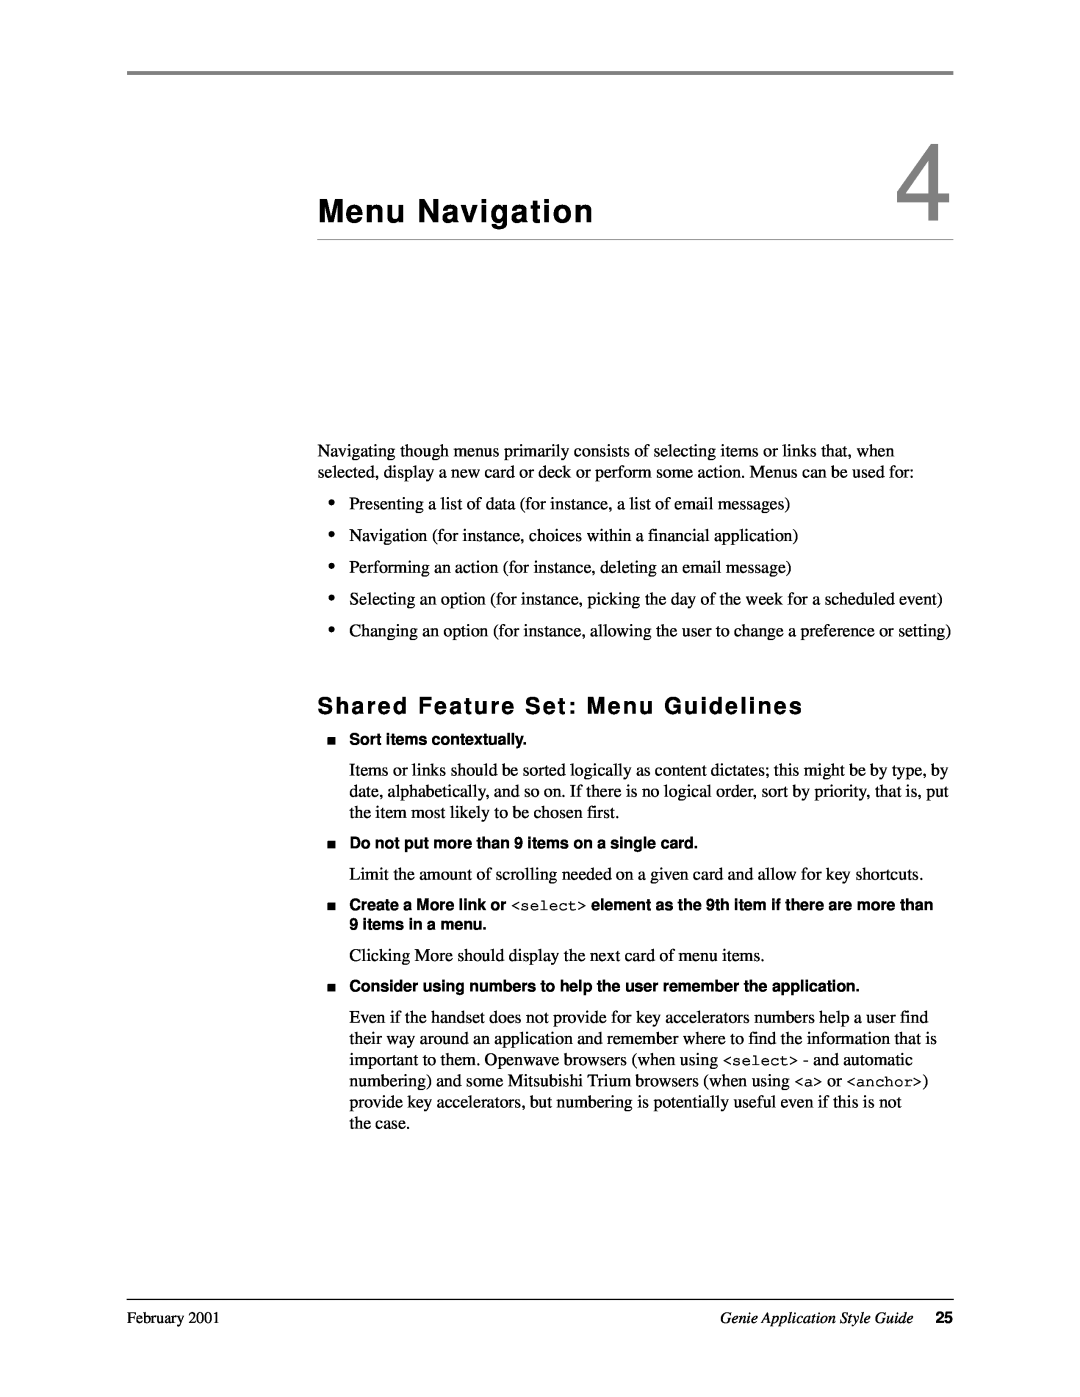 Genie 7110 manual Menu Navigation, Shared Feature Set Menu Guidelines 